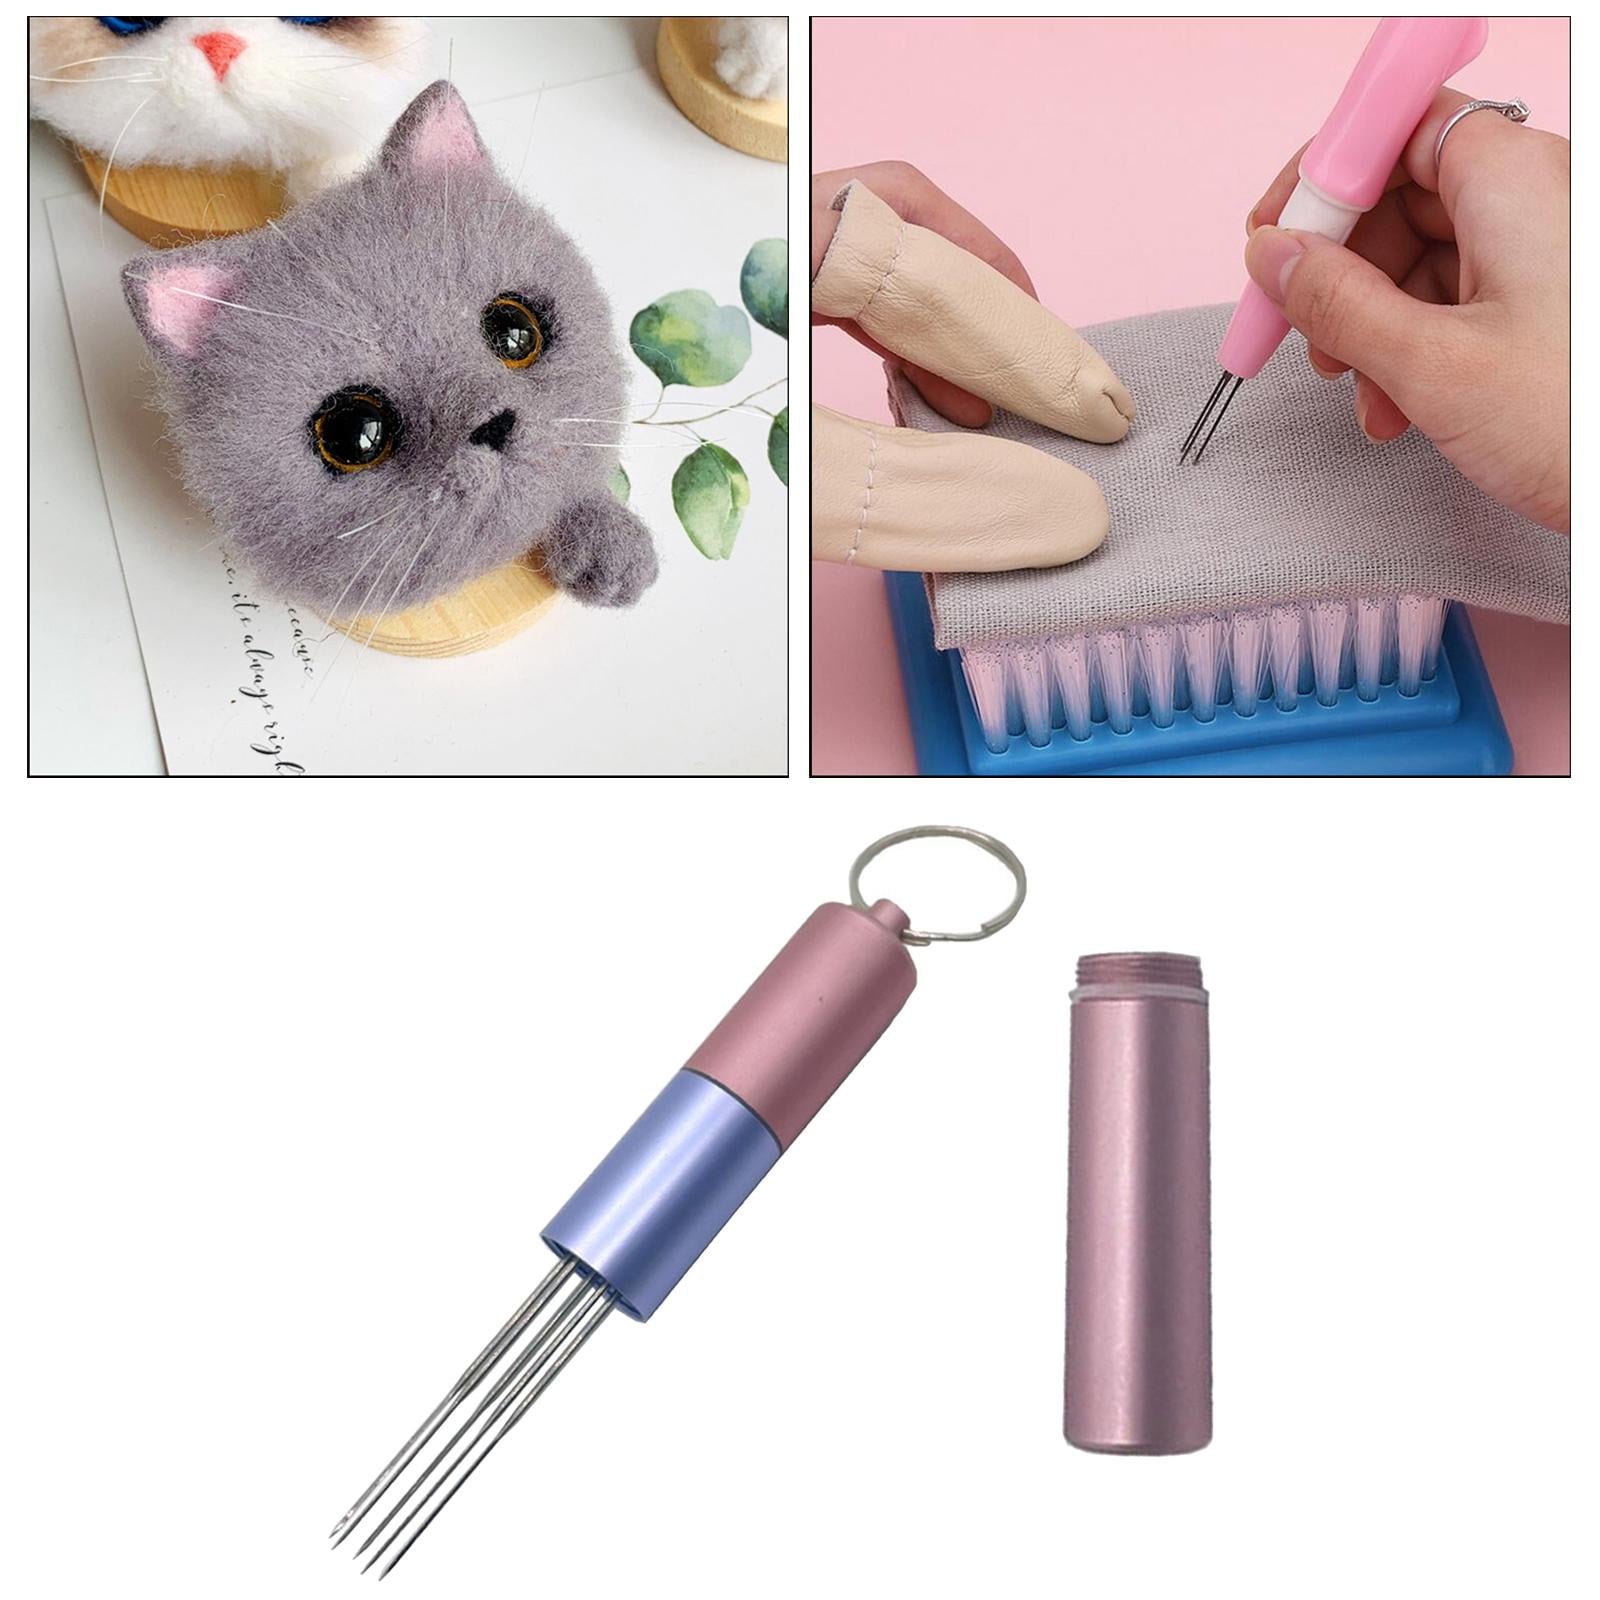 Mini Sleeping Cat Needle Felting Kits For Beginners, Needles, Finger  Guards, Foam Mat, Instructions, Diy Felting Craft Gift - Felt Diy Package -  AliExpress